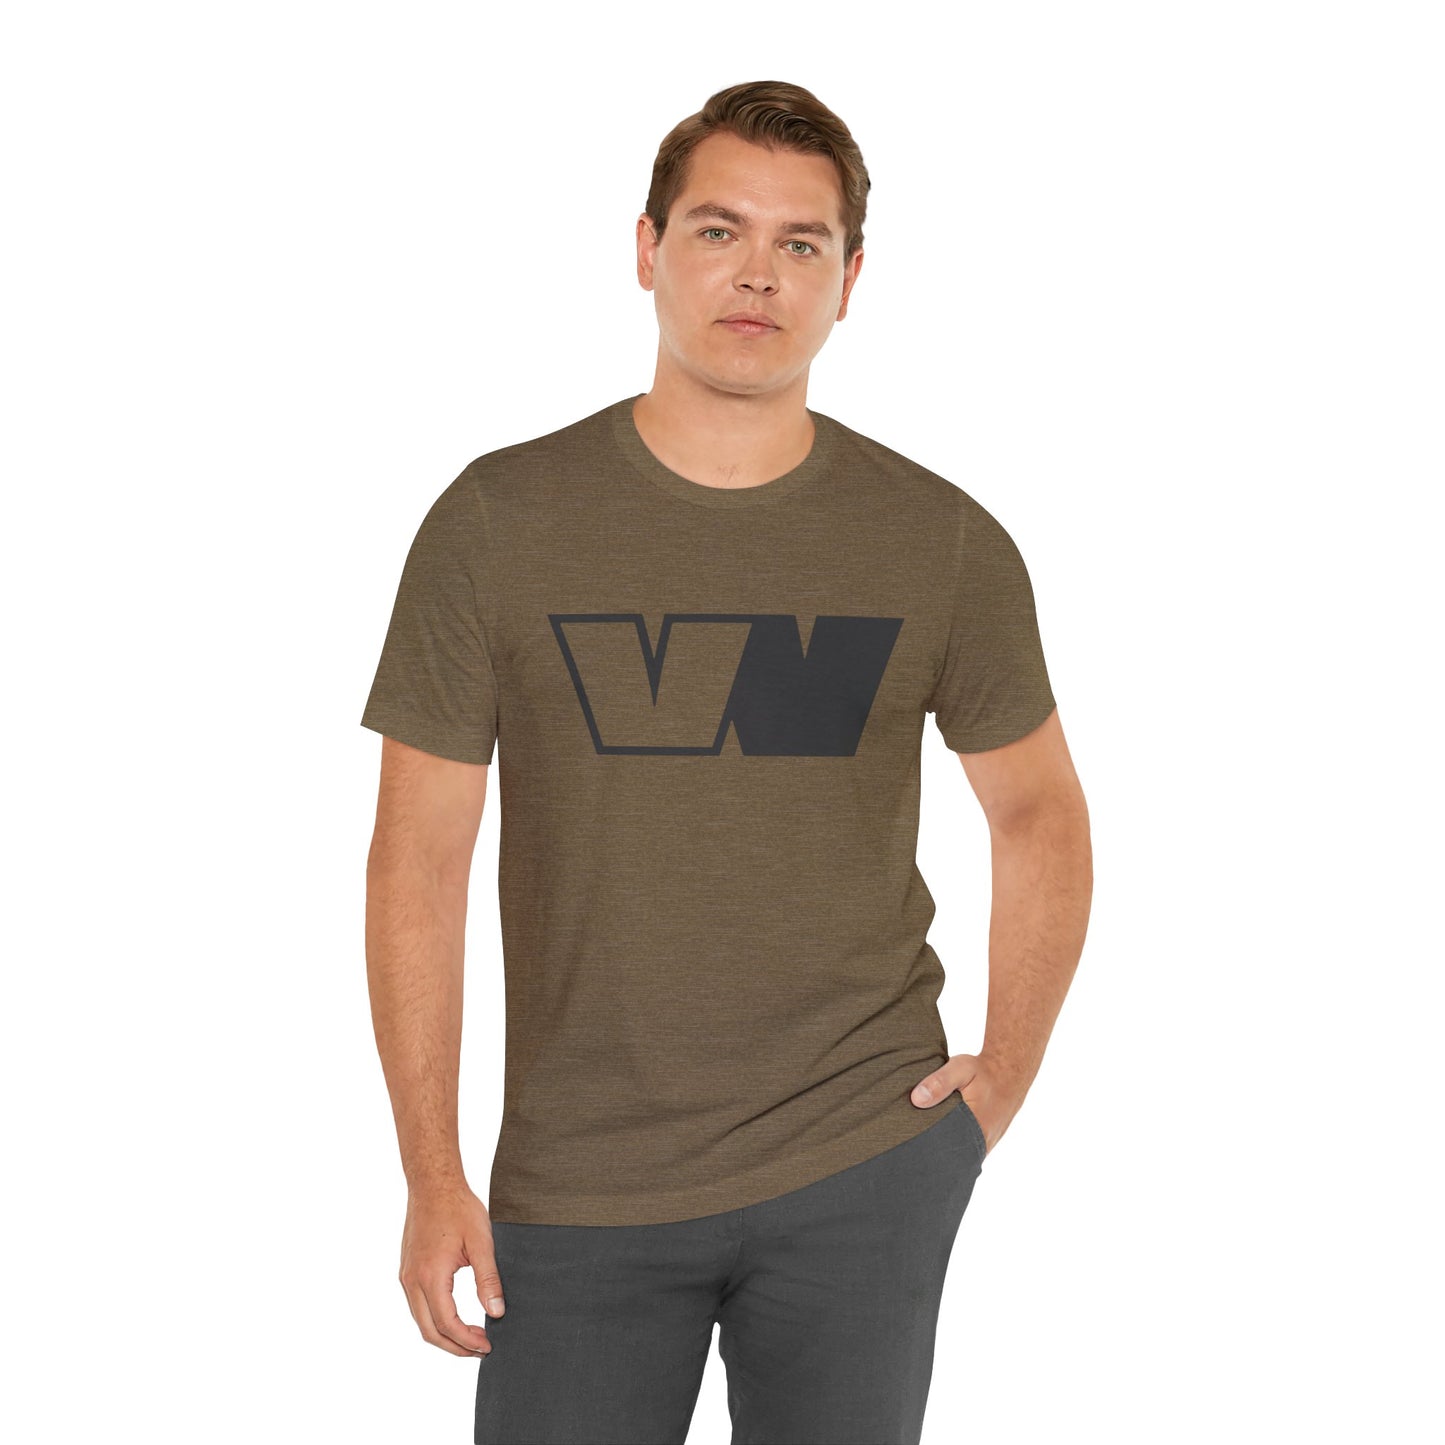 Vicious Wrestling Discreet Logo Jersey Short Sleeve Tee